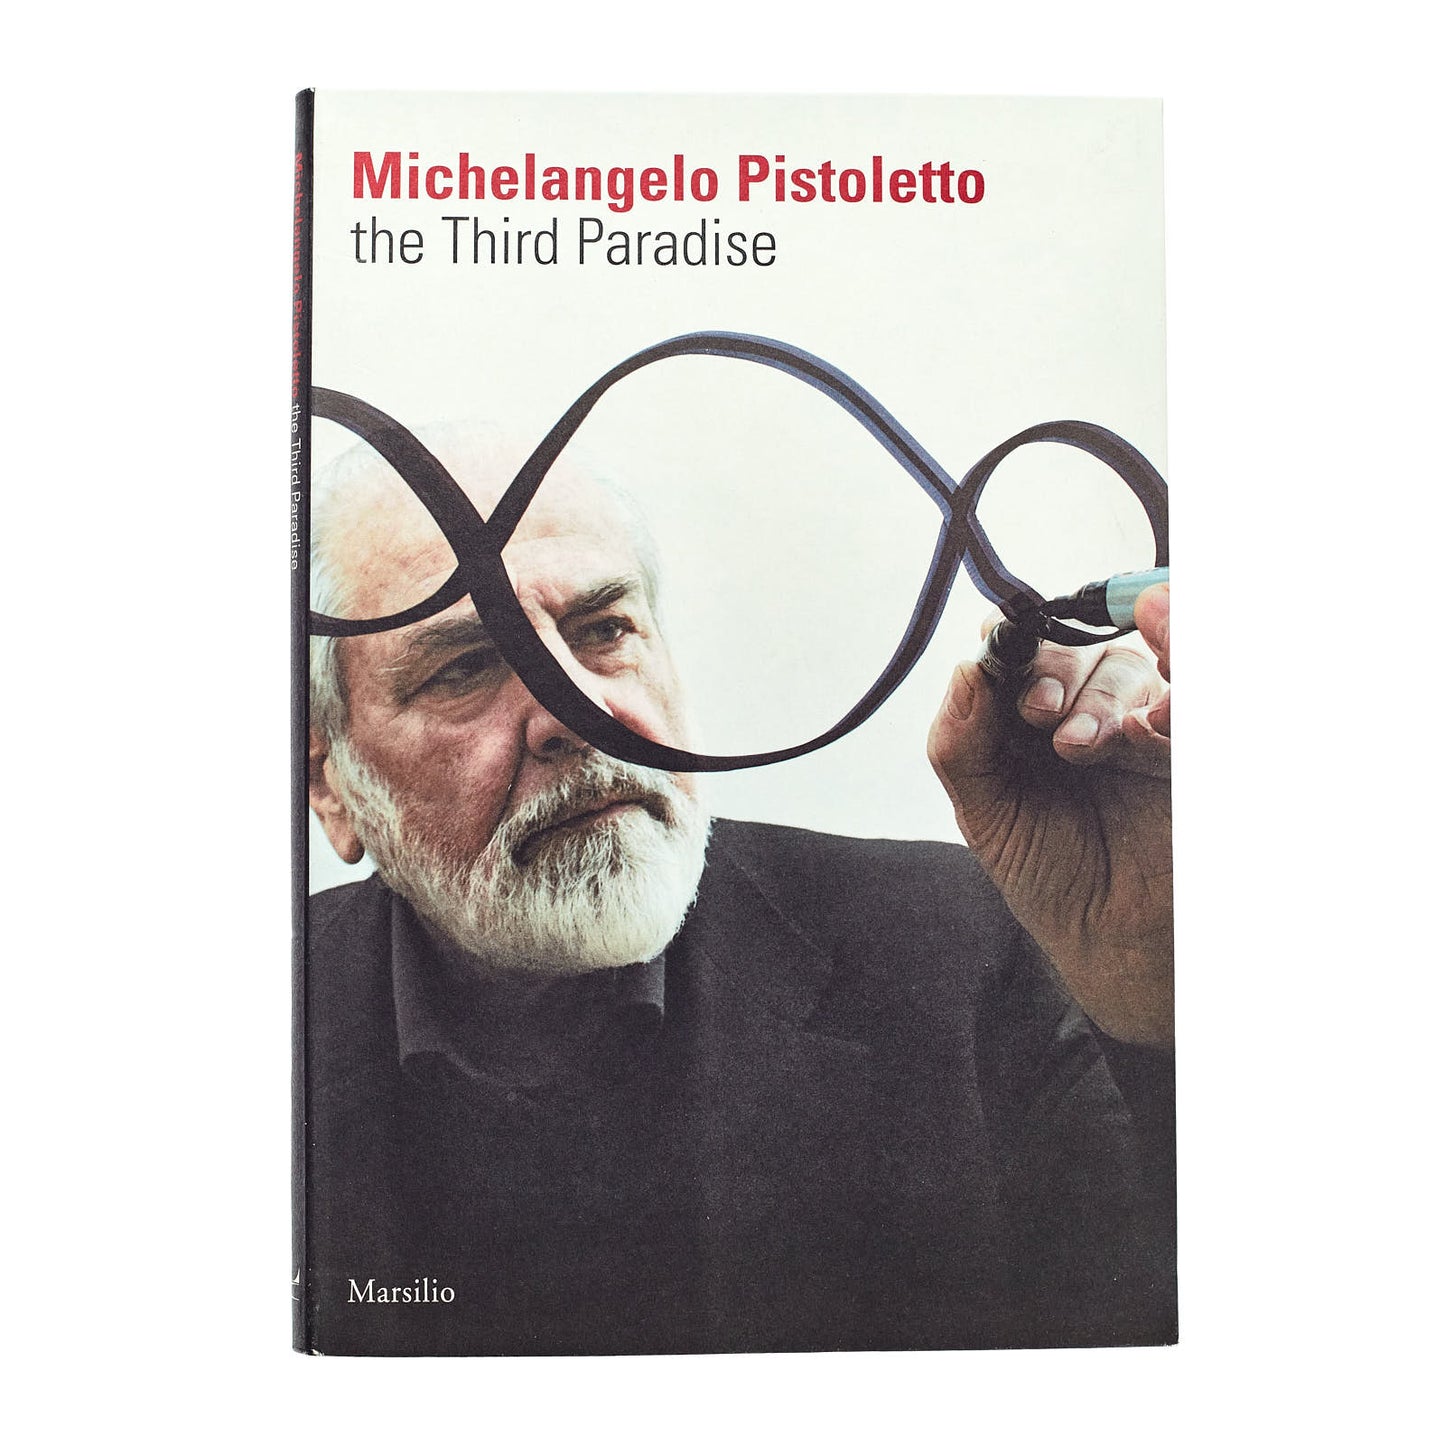 The Third Paradise (Michelangelo Pistoletto)